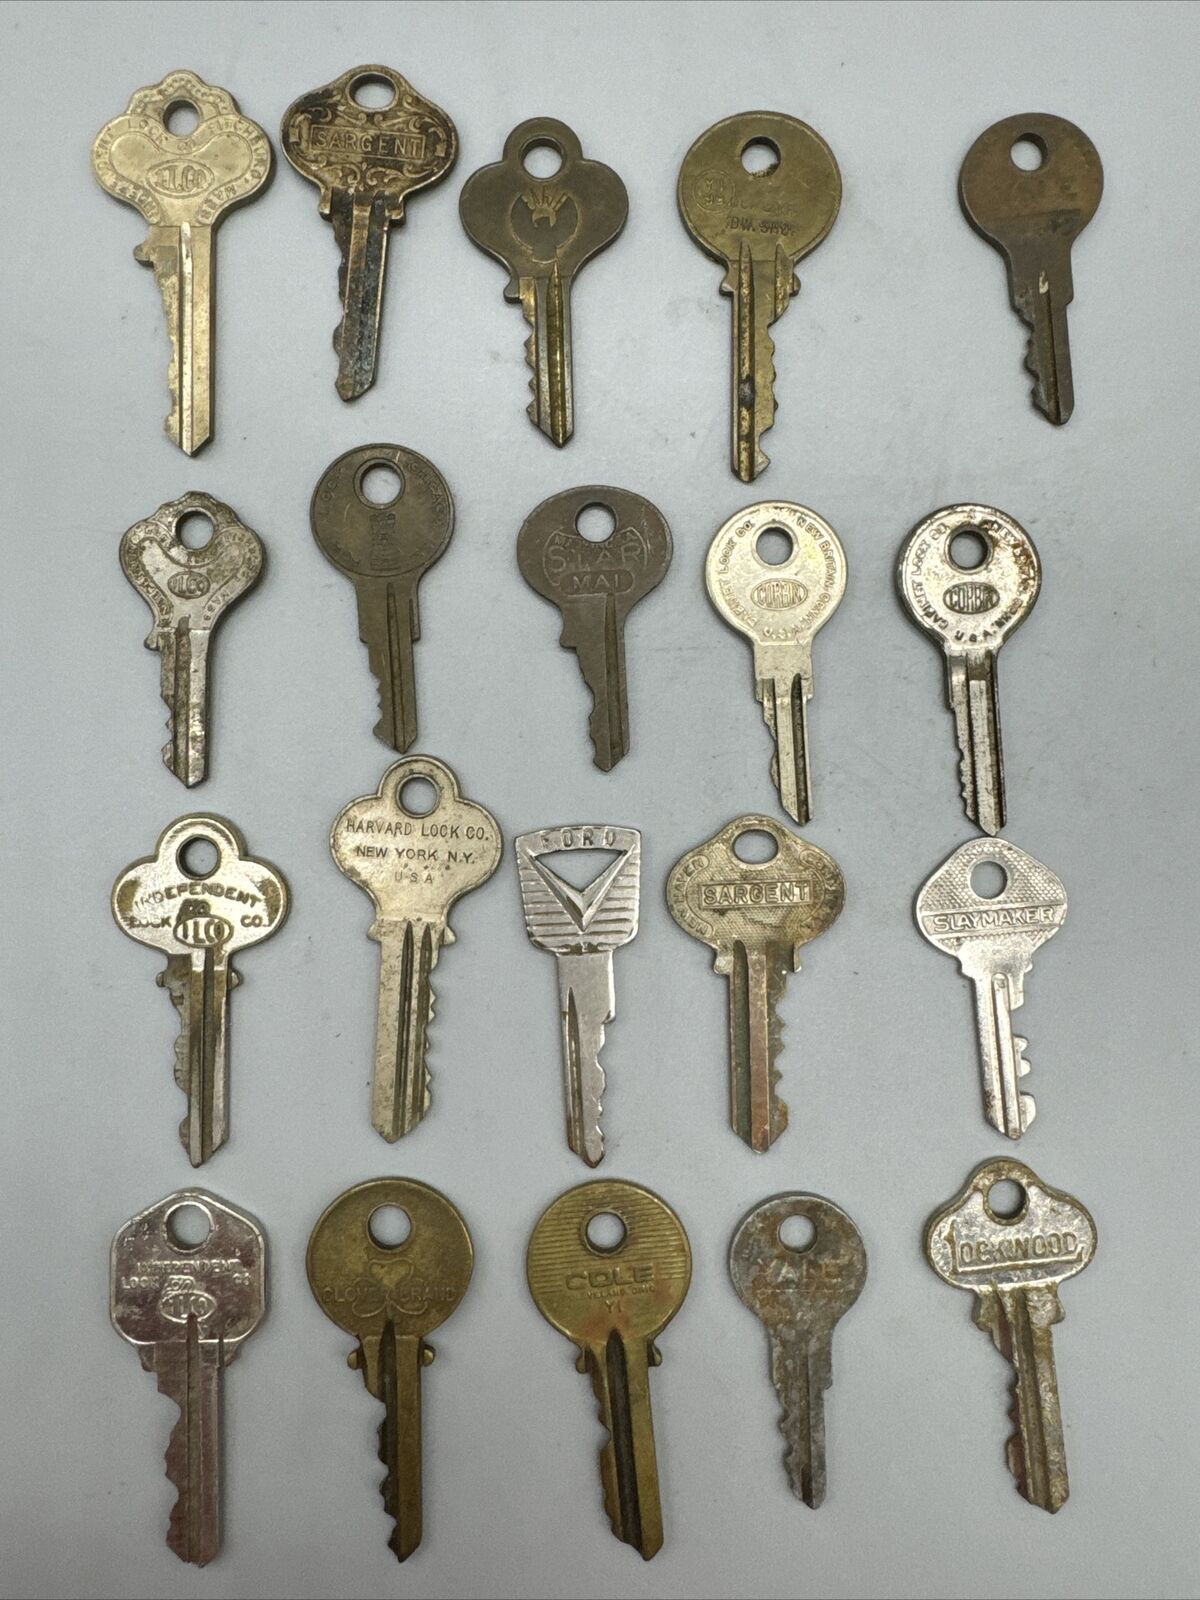 Lot of 20 Vintage keys